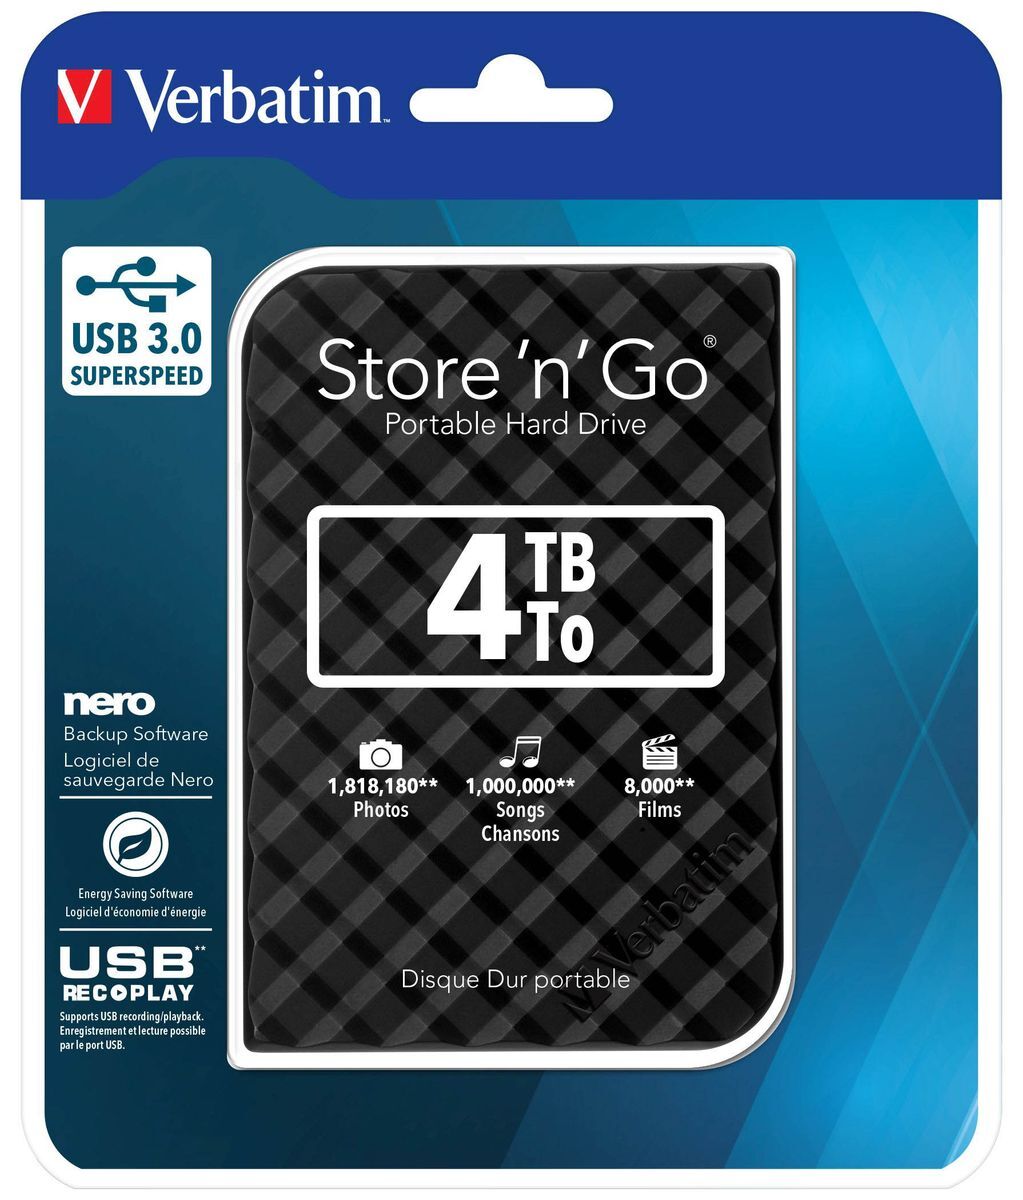 Festplatte Store 'n' Go USB 3.0 SuperSpeed - 4TB, schwarz